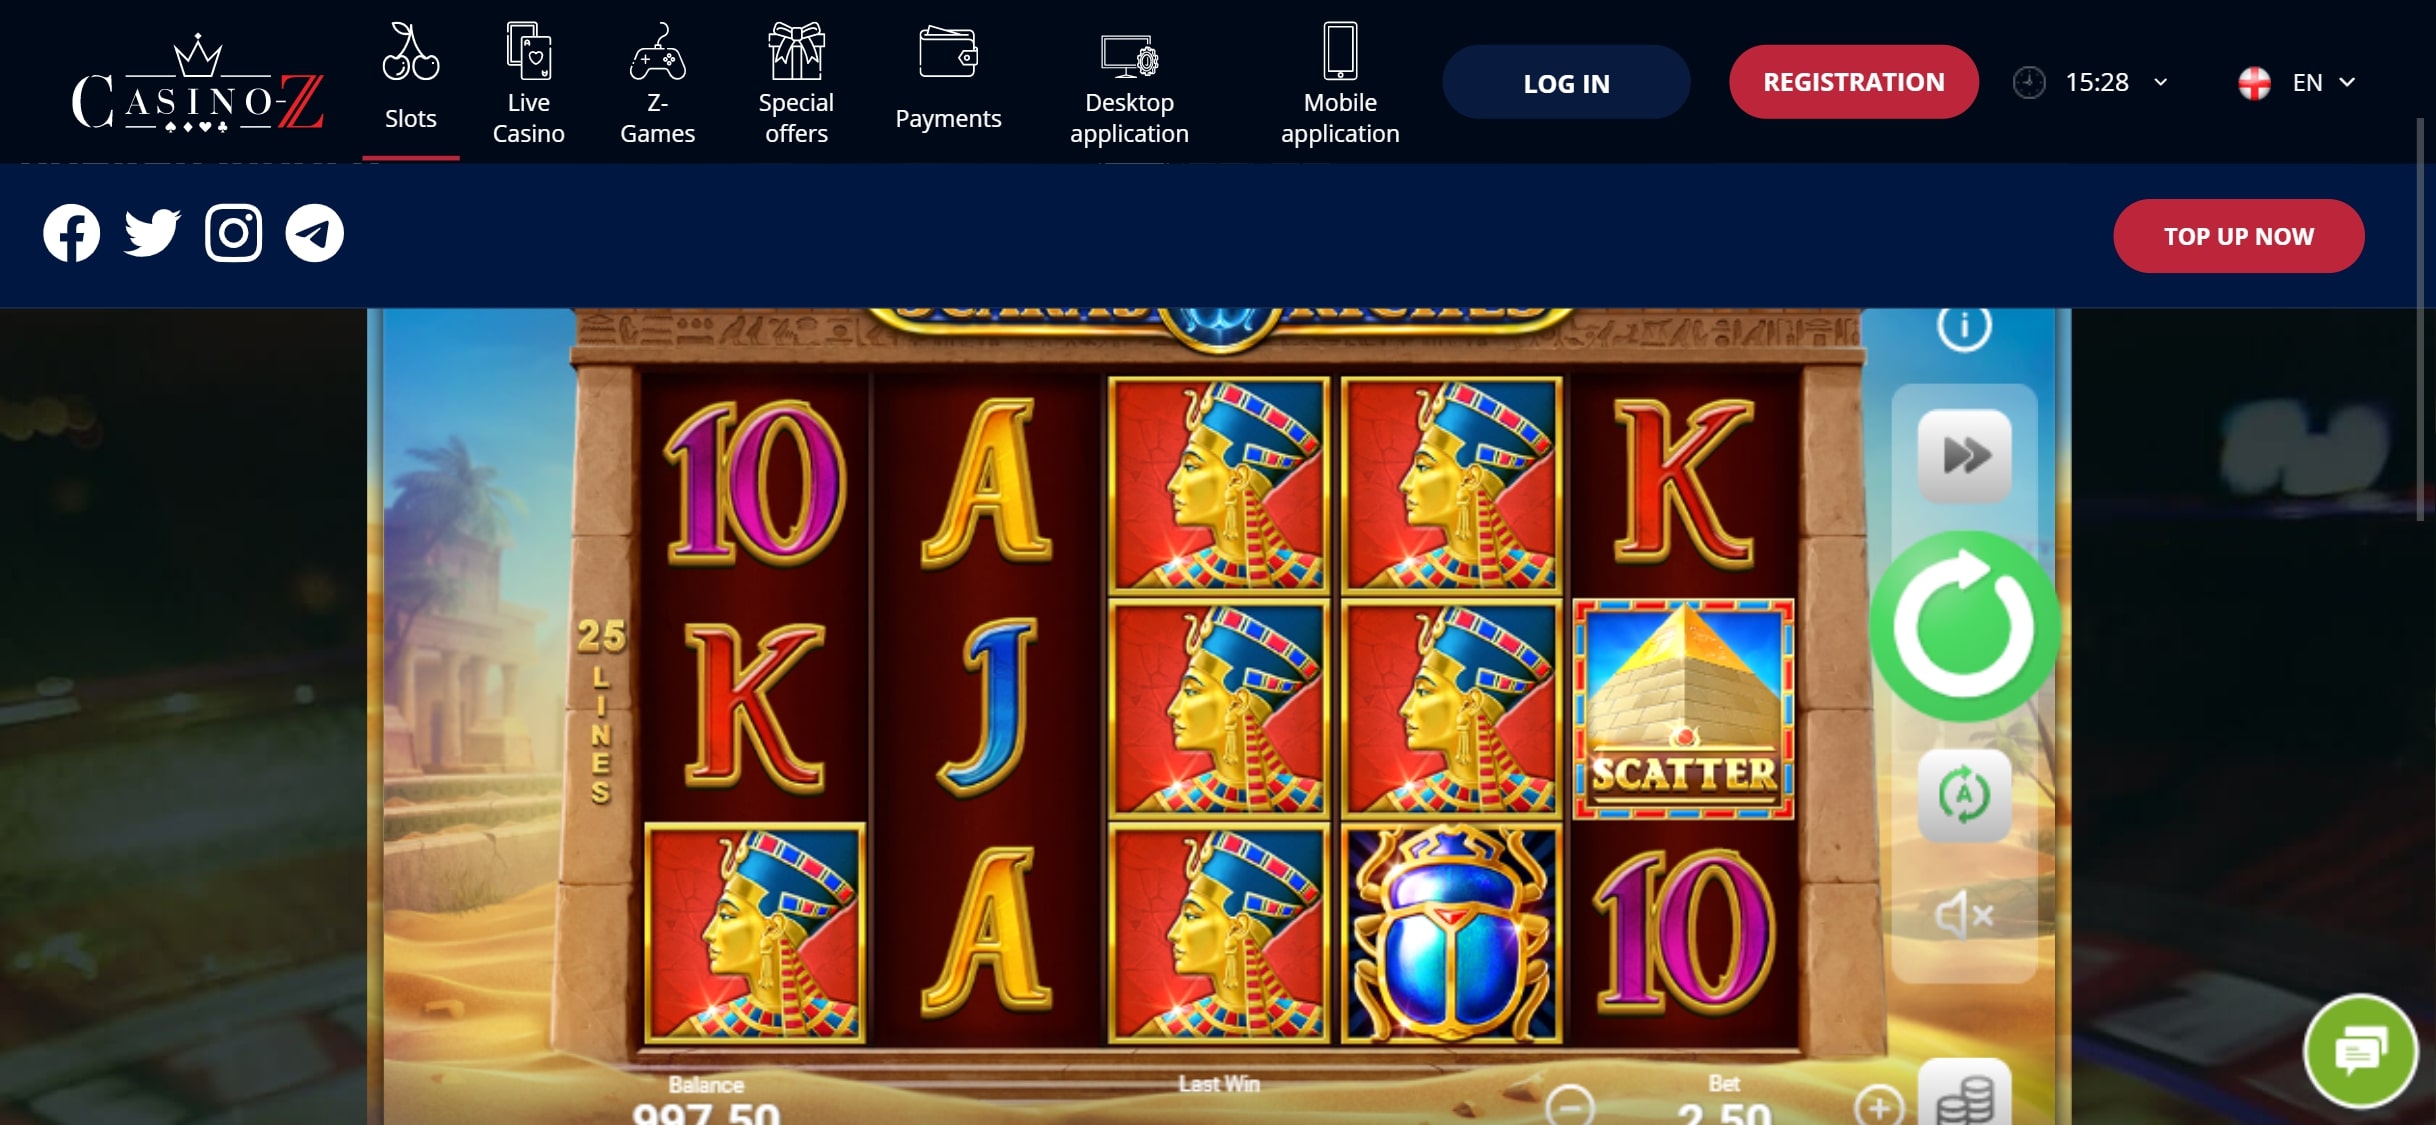 Casino-Z Mobile Slot Games Review